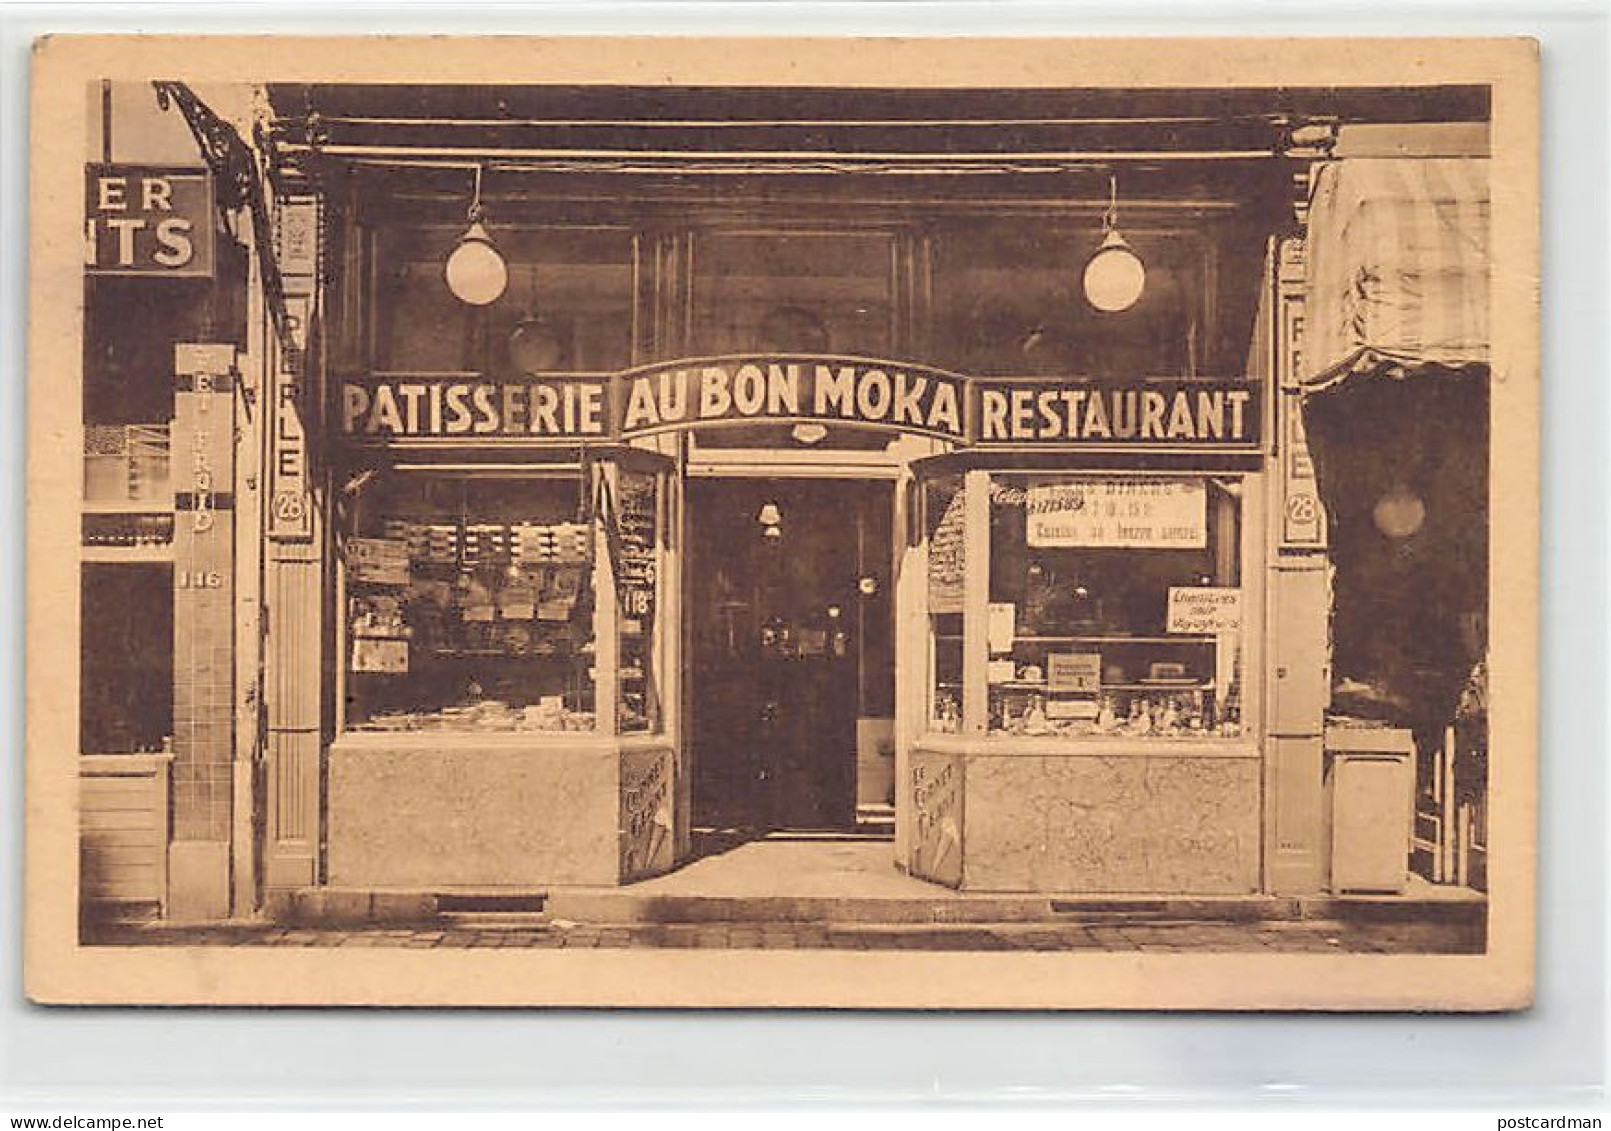 BRUXELLES - Au Bon Moka - Pâtisserie Restaurant - 118 Rue Neuve - Cafés, Hotels, Restaurants